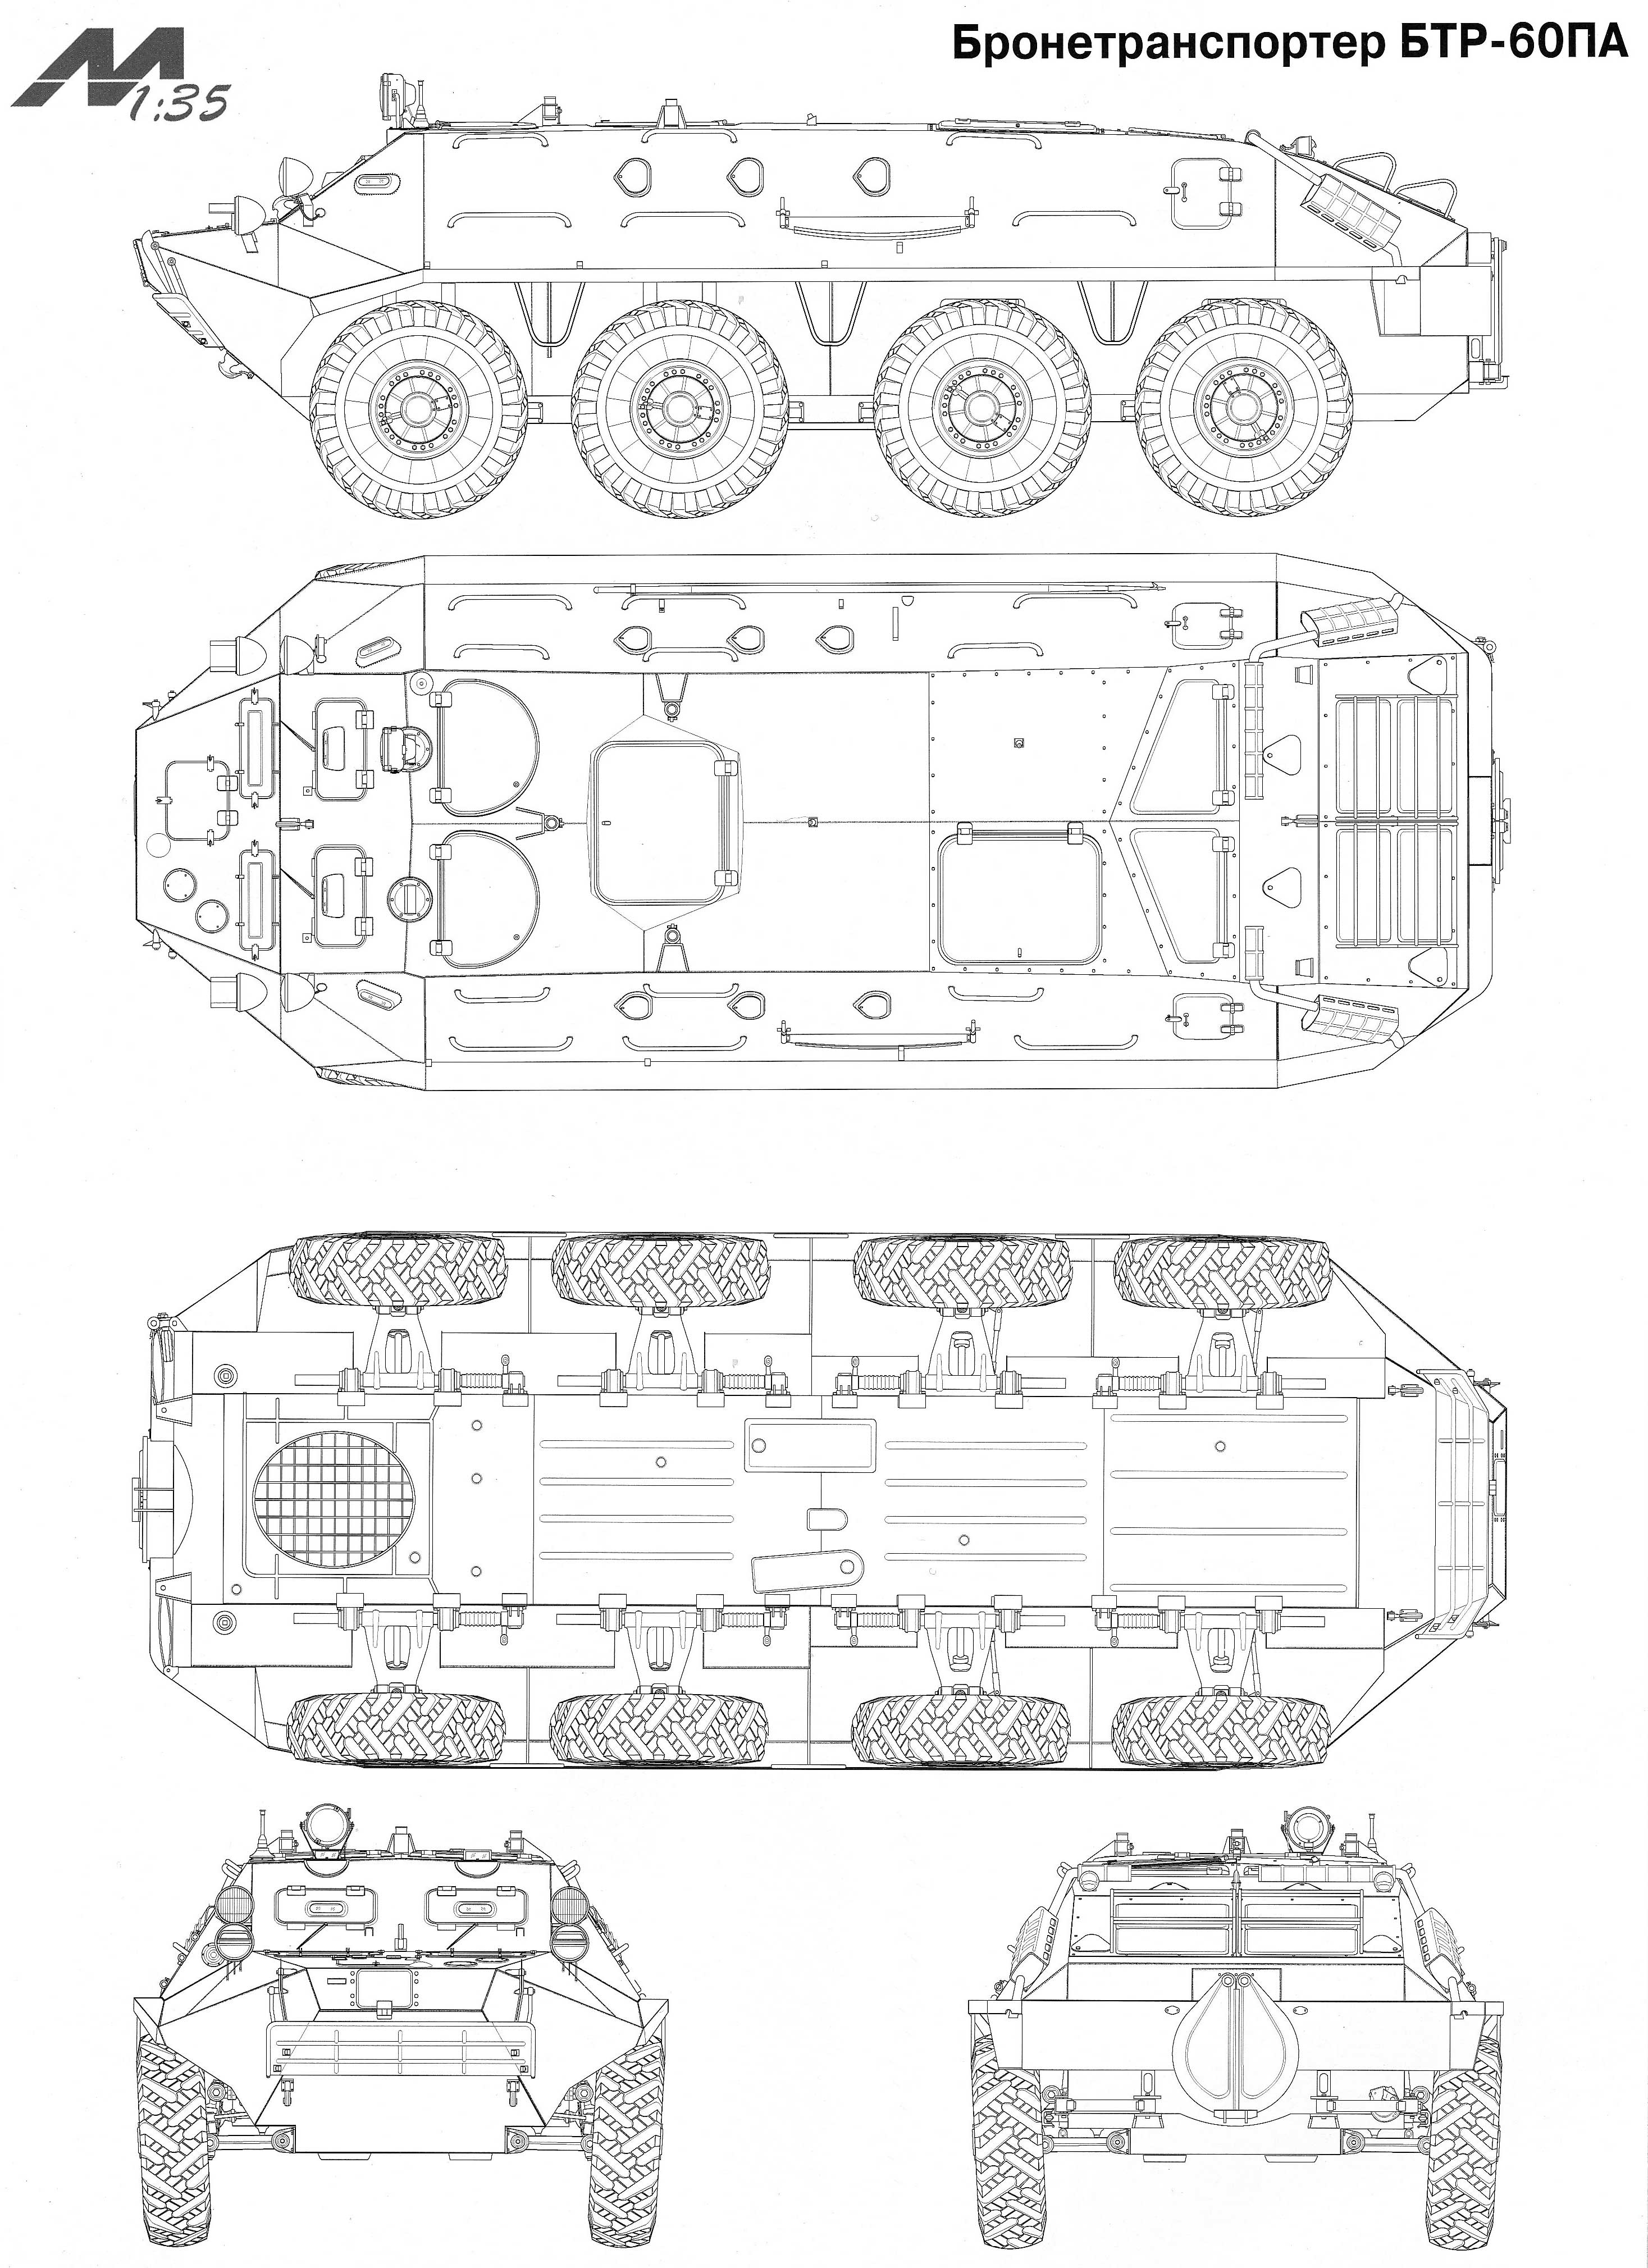 BTR-60 blueprint